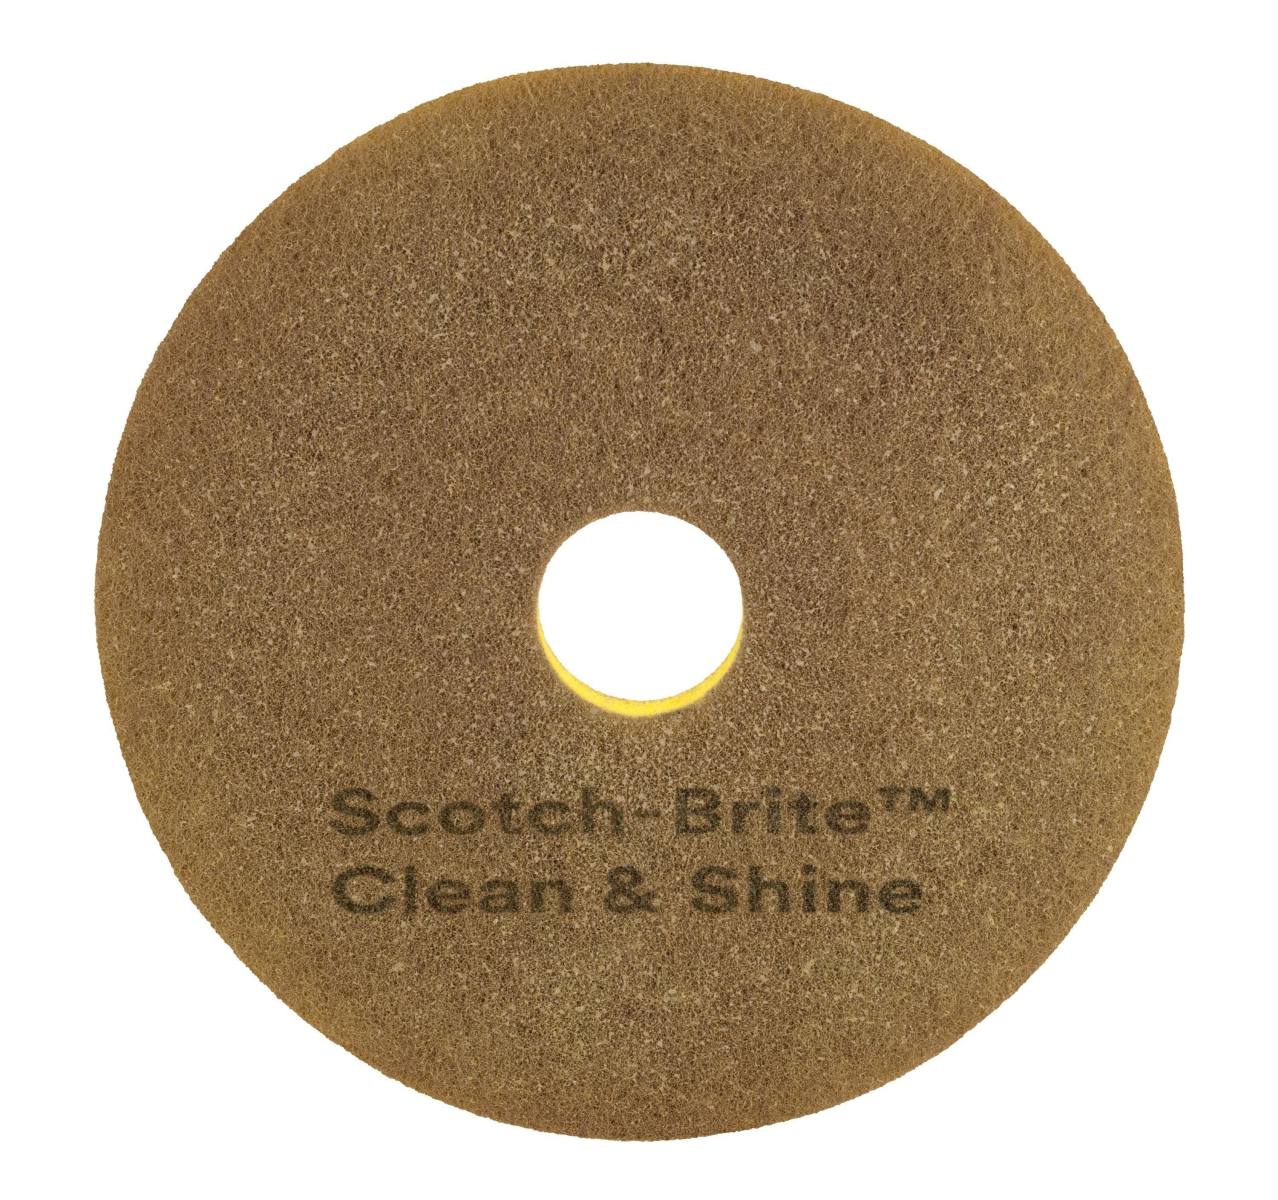 3M Scotch-Brite Clean & Shine Maschinenpad, 480 mm, 5 Stück / Karton